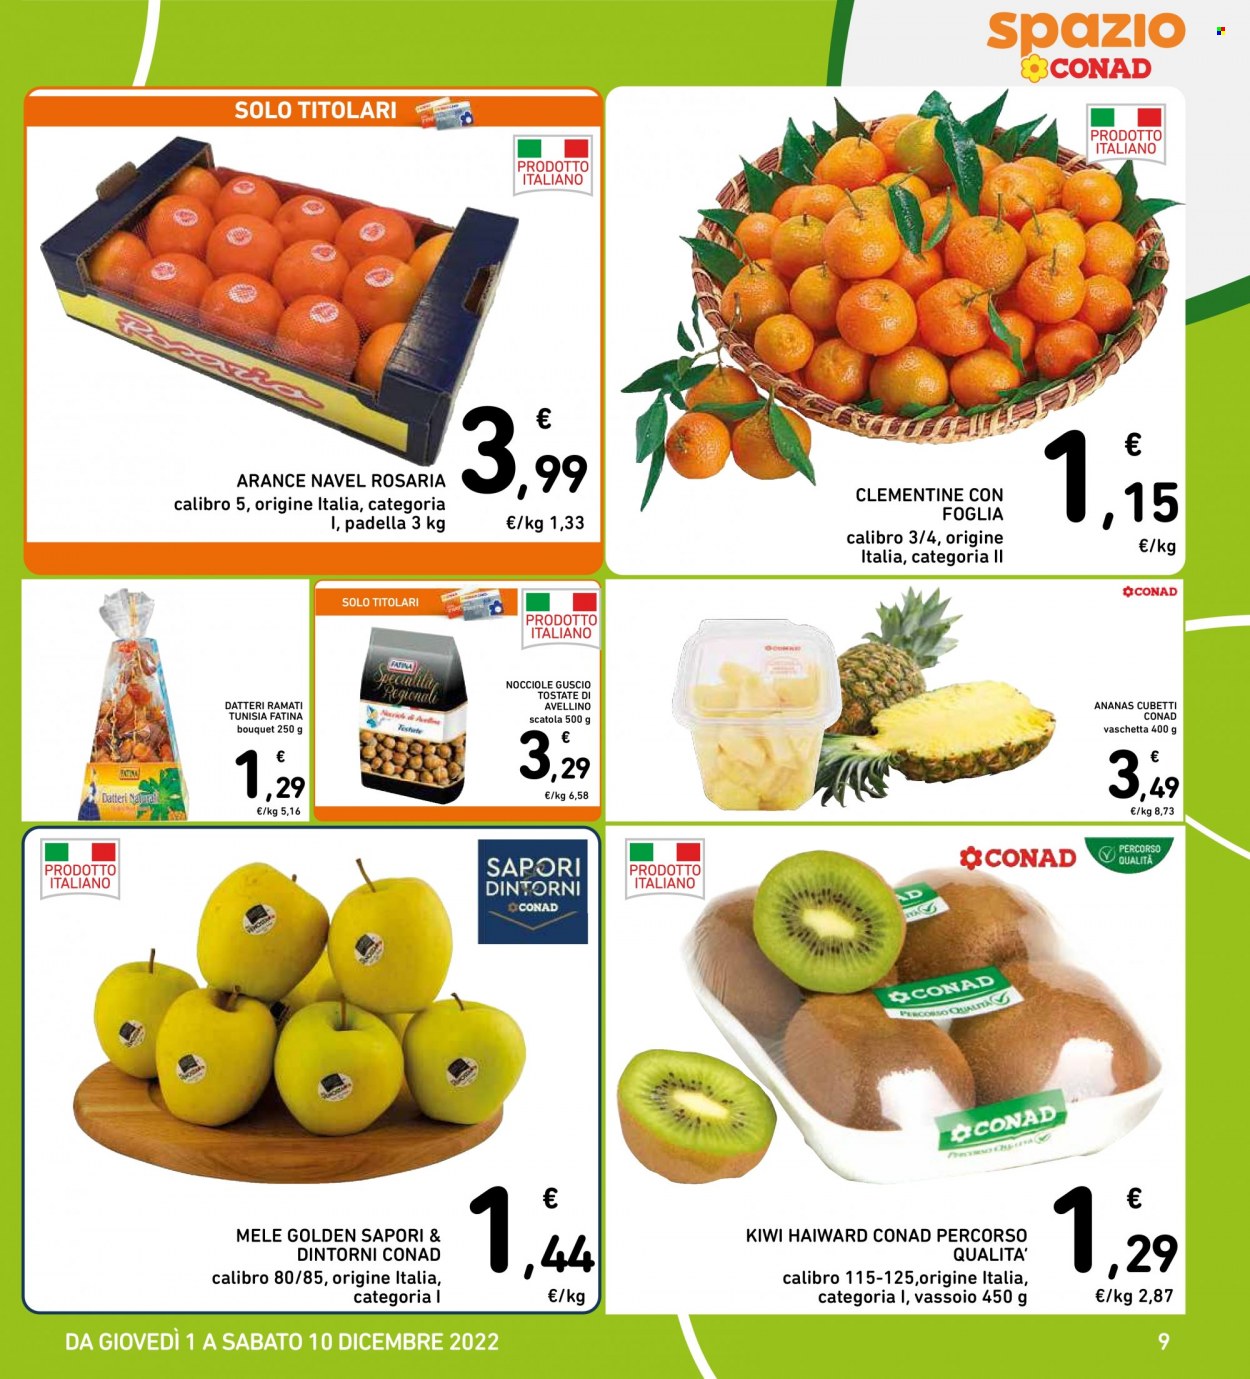 thumbnail - Volantino Conad - 1/12/2022 - 10/12/2022 - Prodotti in offerta - mele, ananas, arance, arancie Navel, clementine, kiwi, datteri, Fatina, nocciole, padella. Pagina 9.